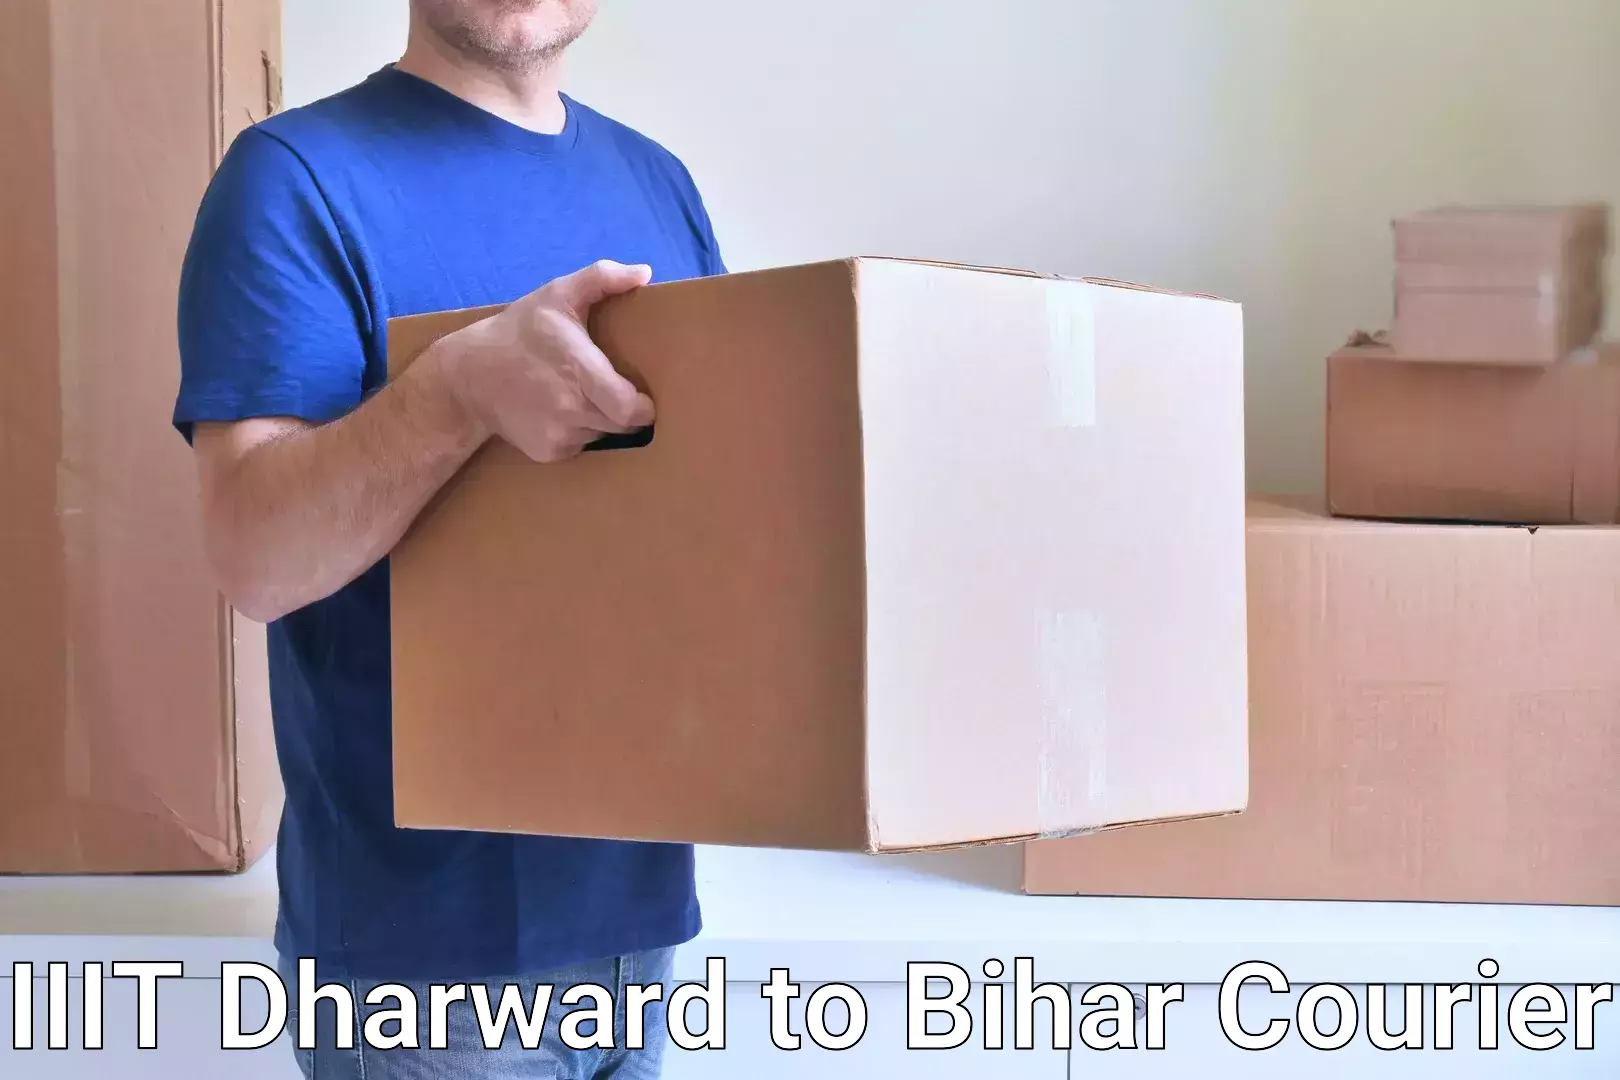 Courier service booking IIIT Dharward to Aurangabad Bihar